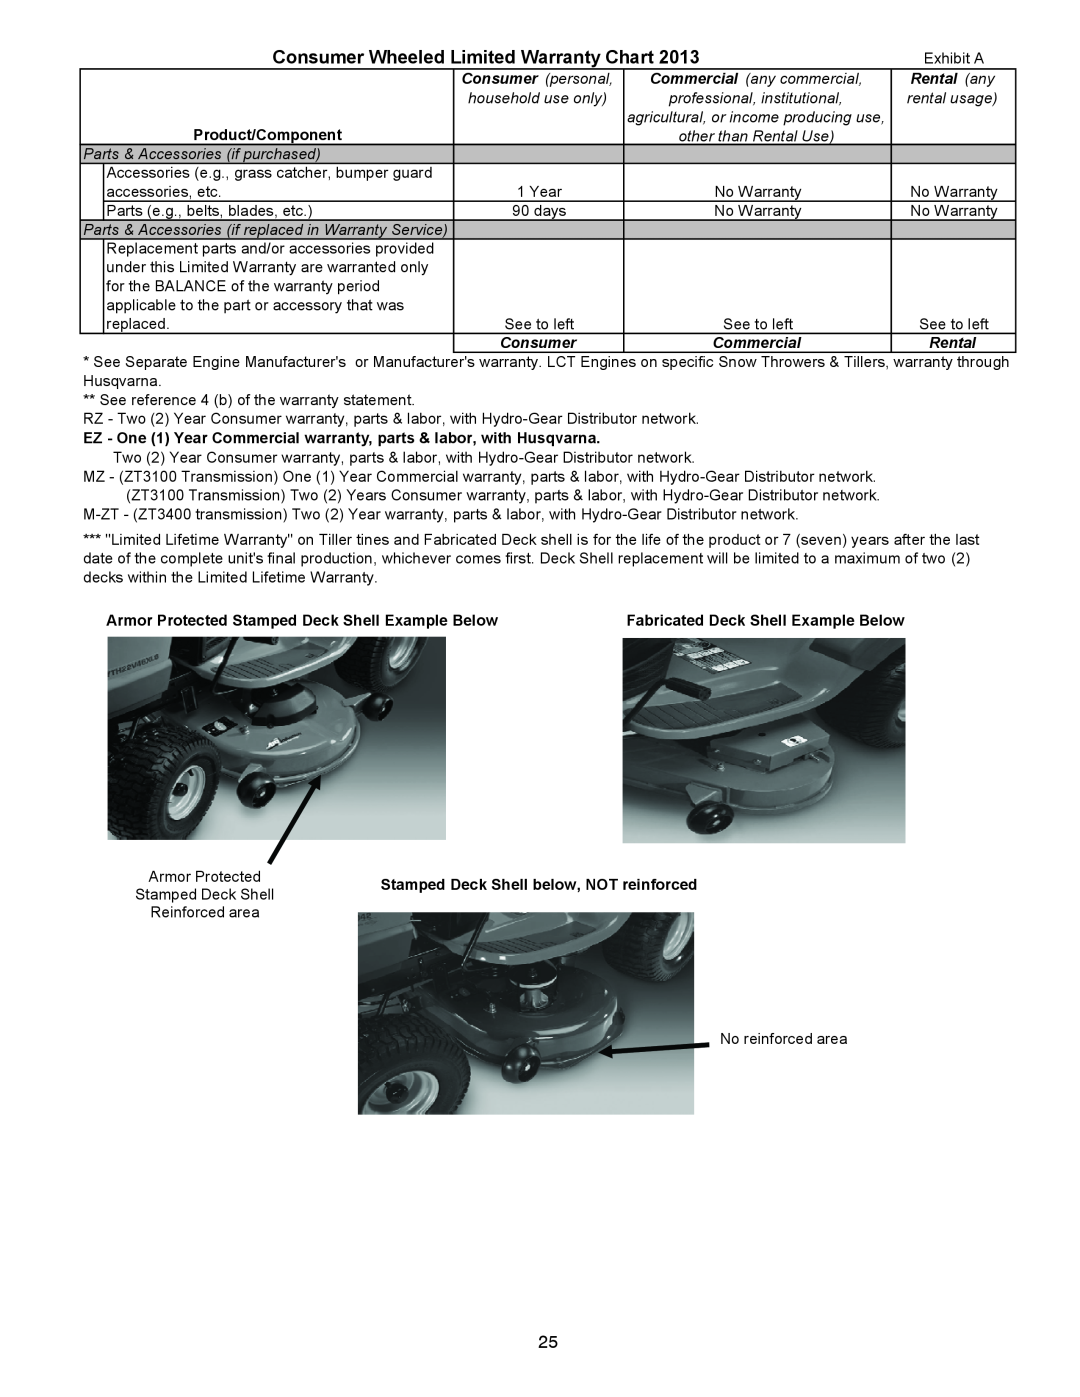 Husqvarna ST 327P warranty Consumer Wheeled Limited Warranty Chart, Product/Component 